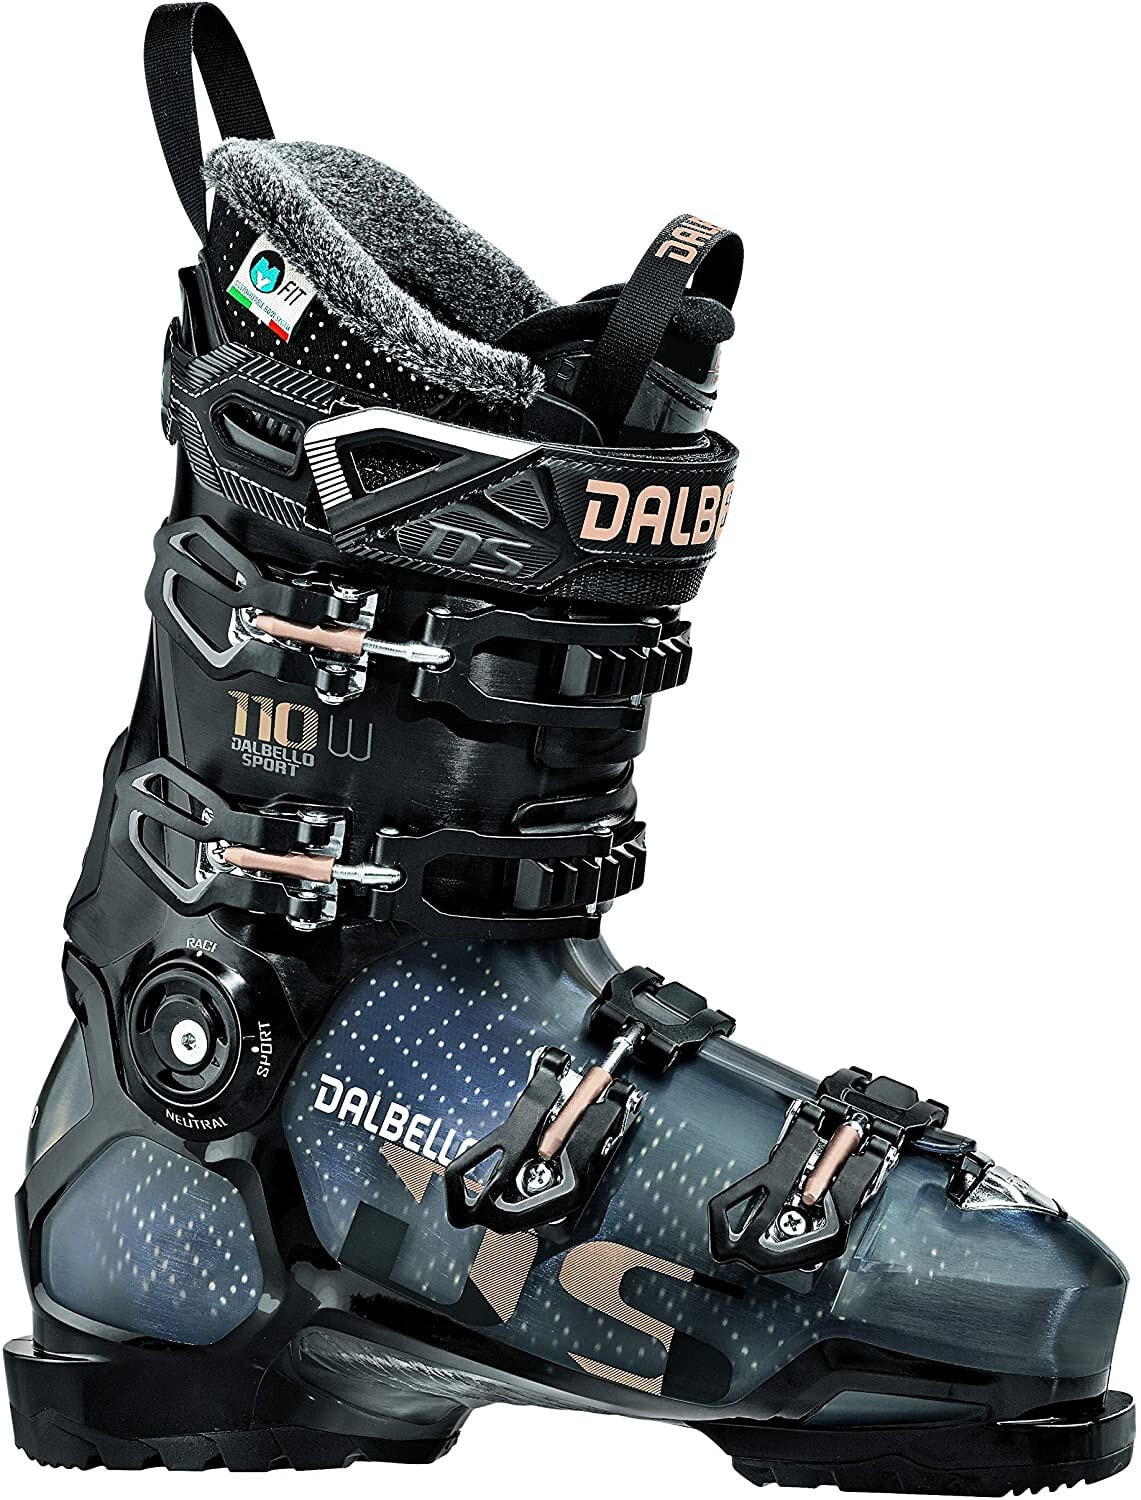 Ботинки для горных лыж Dalbello Women's Ds 110 W LS Trans/Black Ski Boots